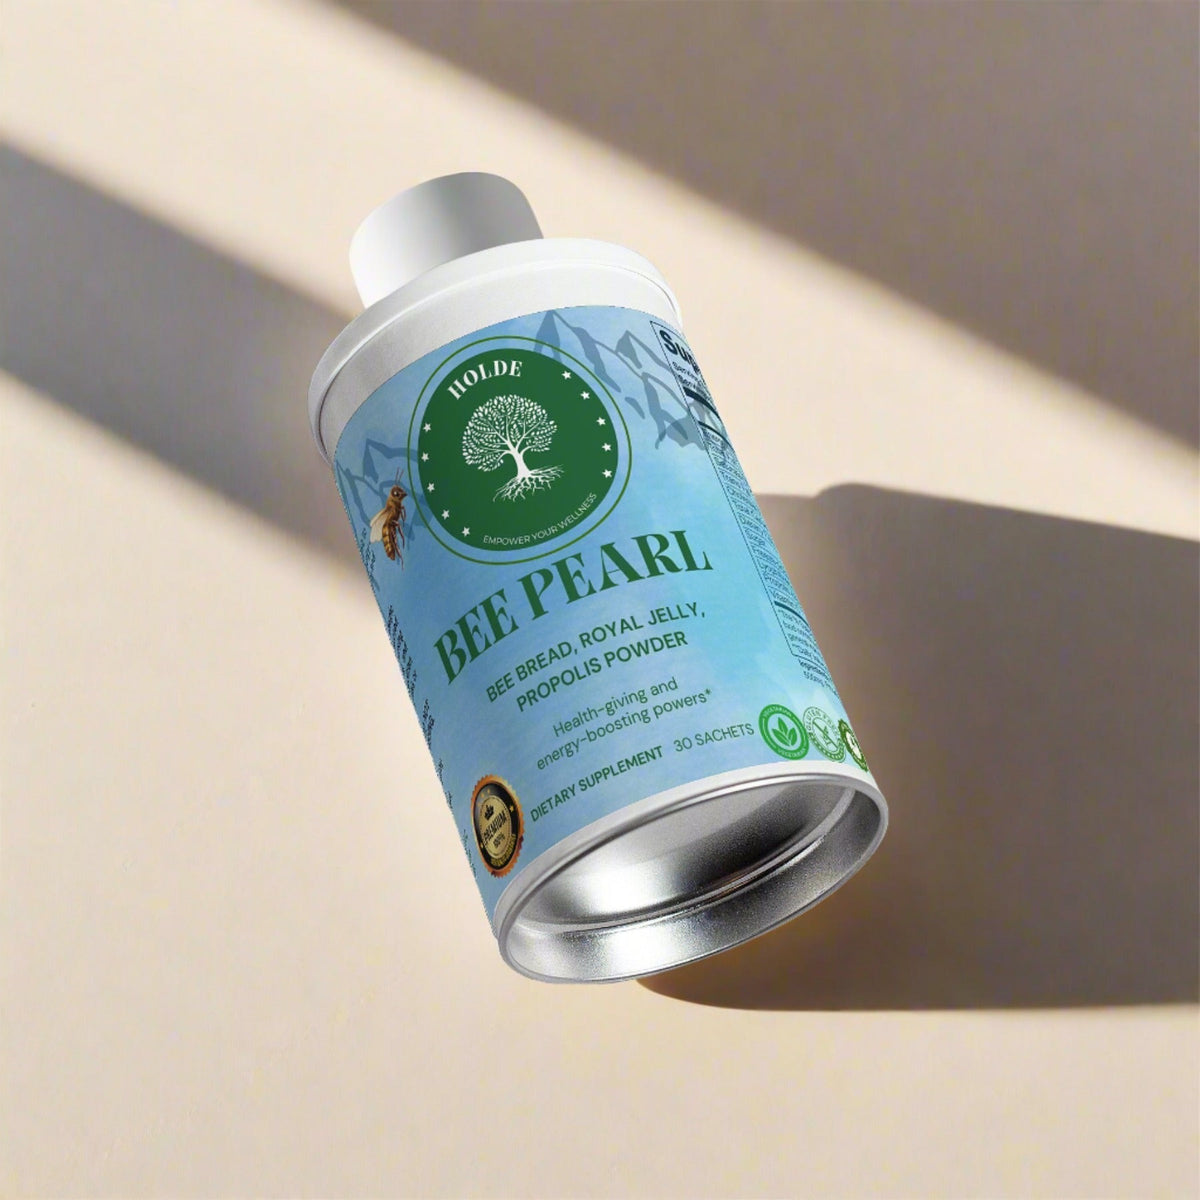 Bee Pearl Powder - HOLDE